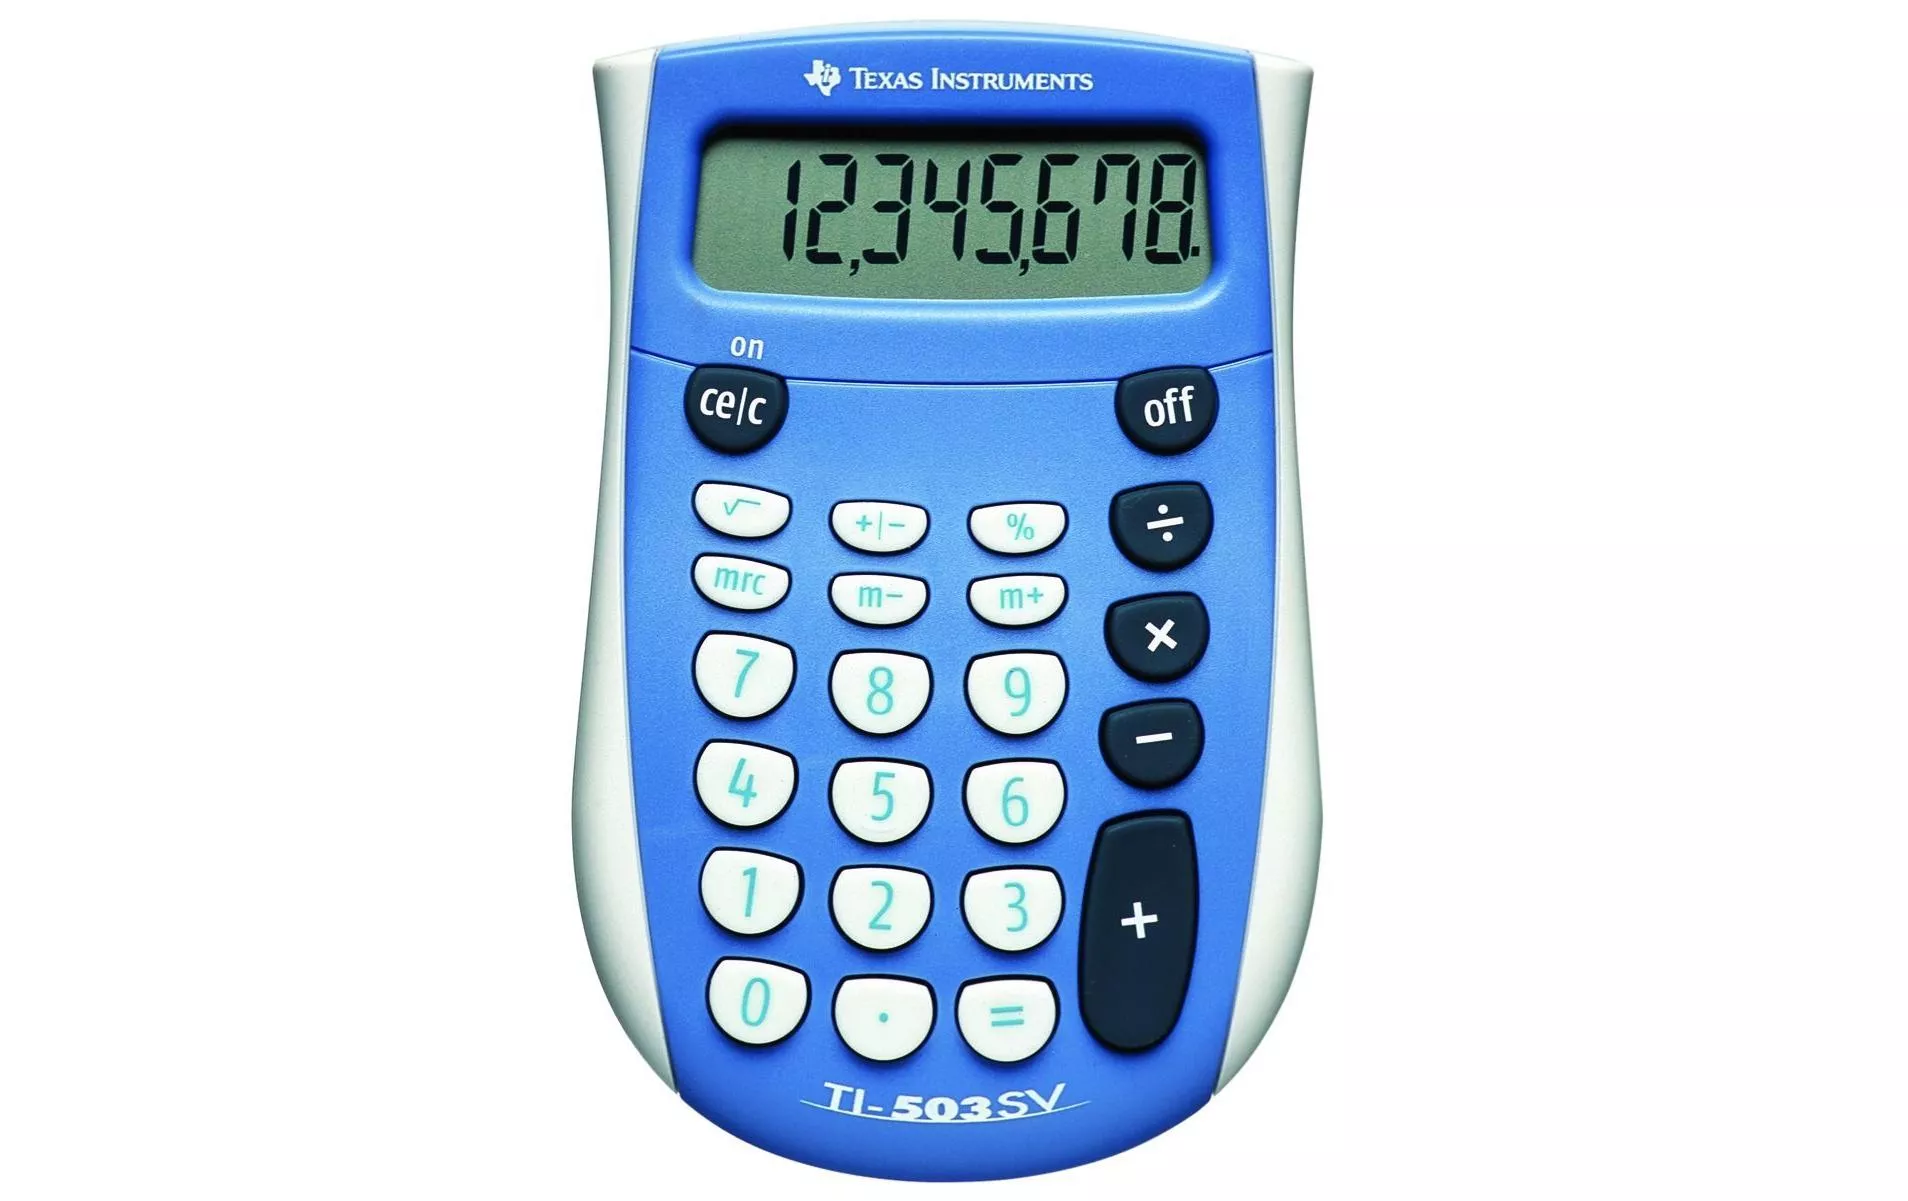 Calcolatrice Texas Instruments TI-503 SV